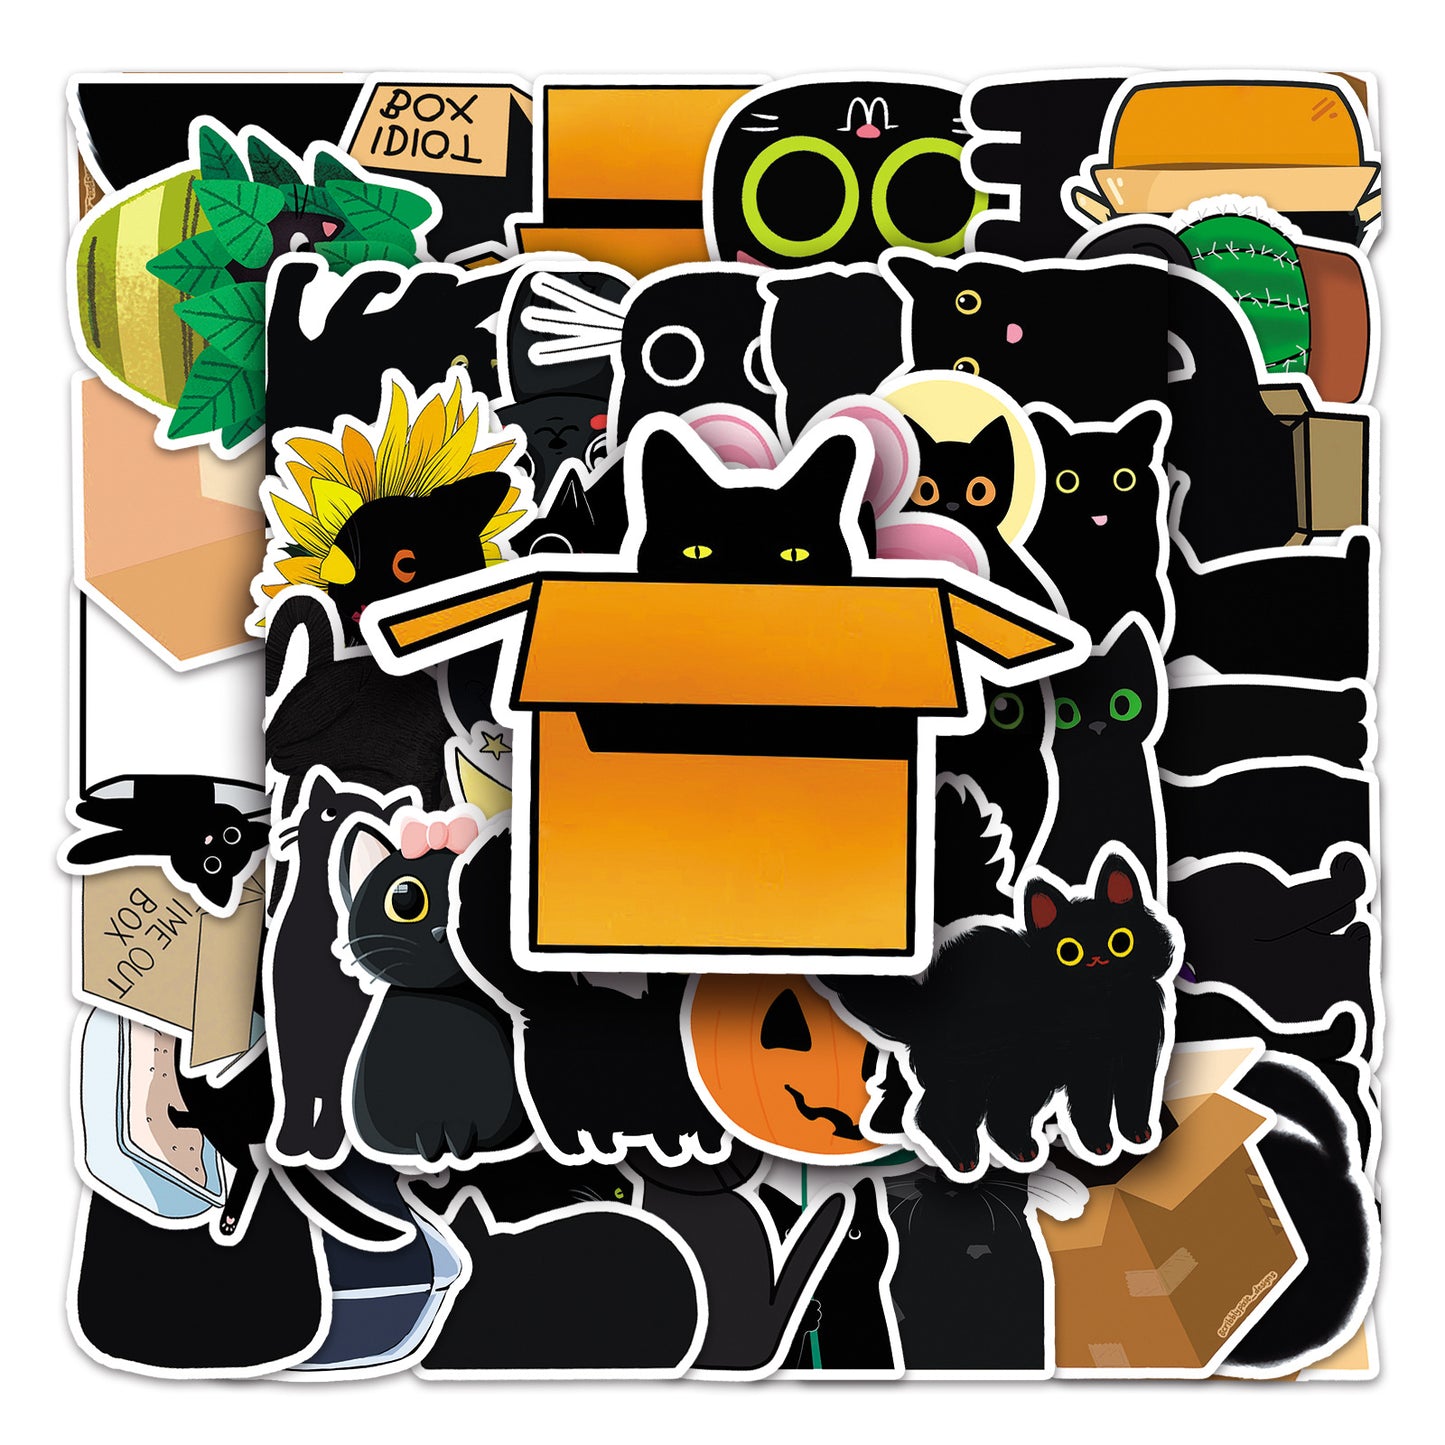 Black Cat Stickers 50pcs - 50 different stickers